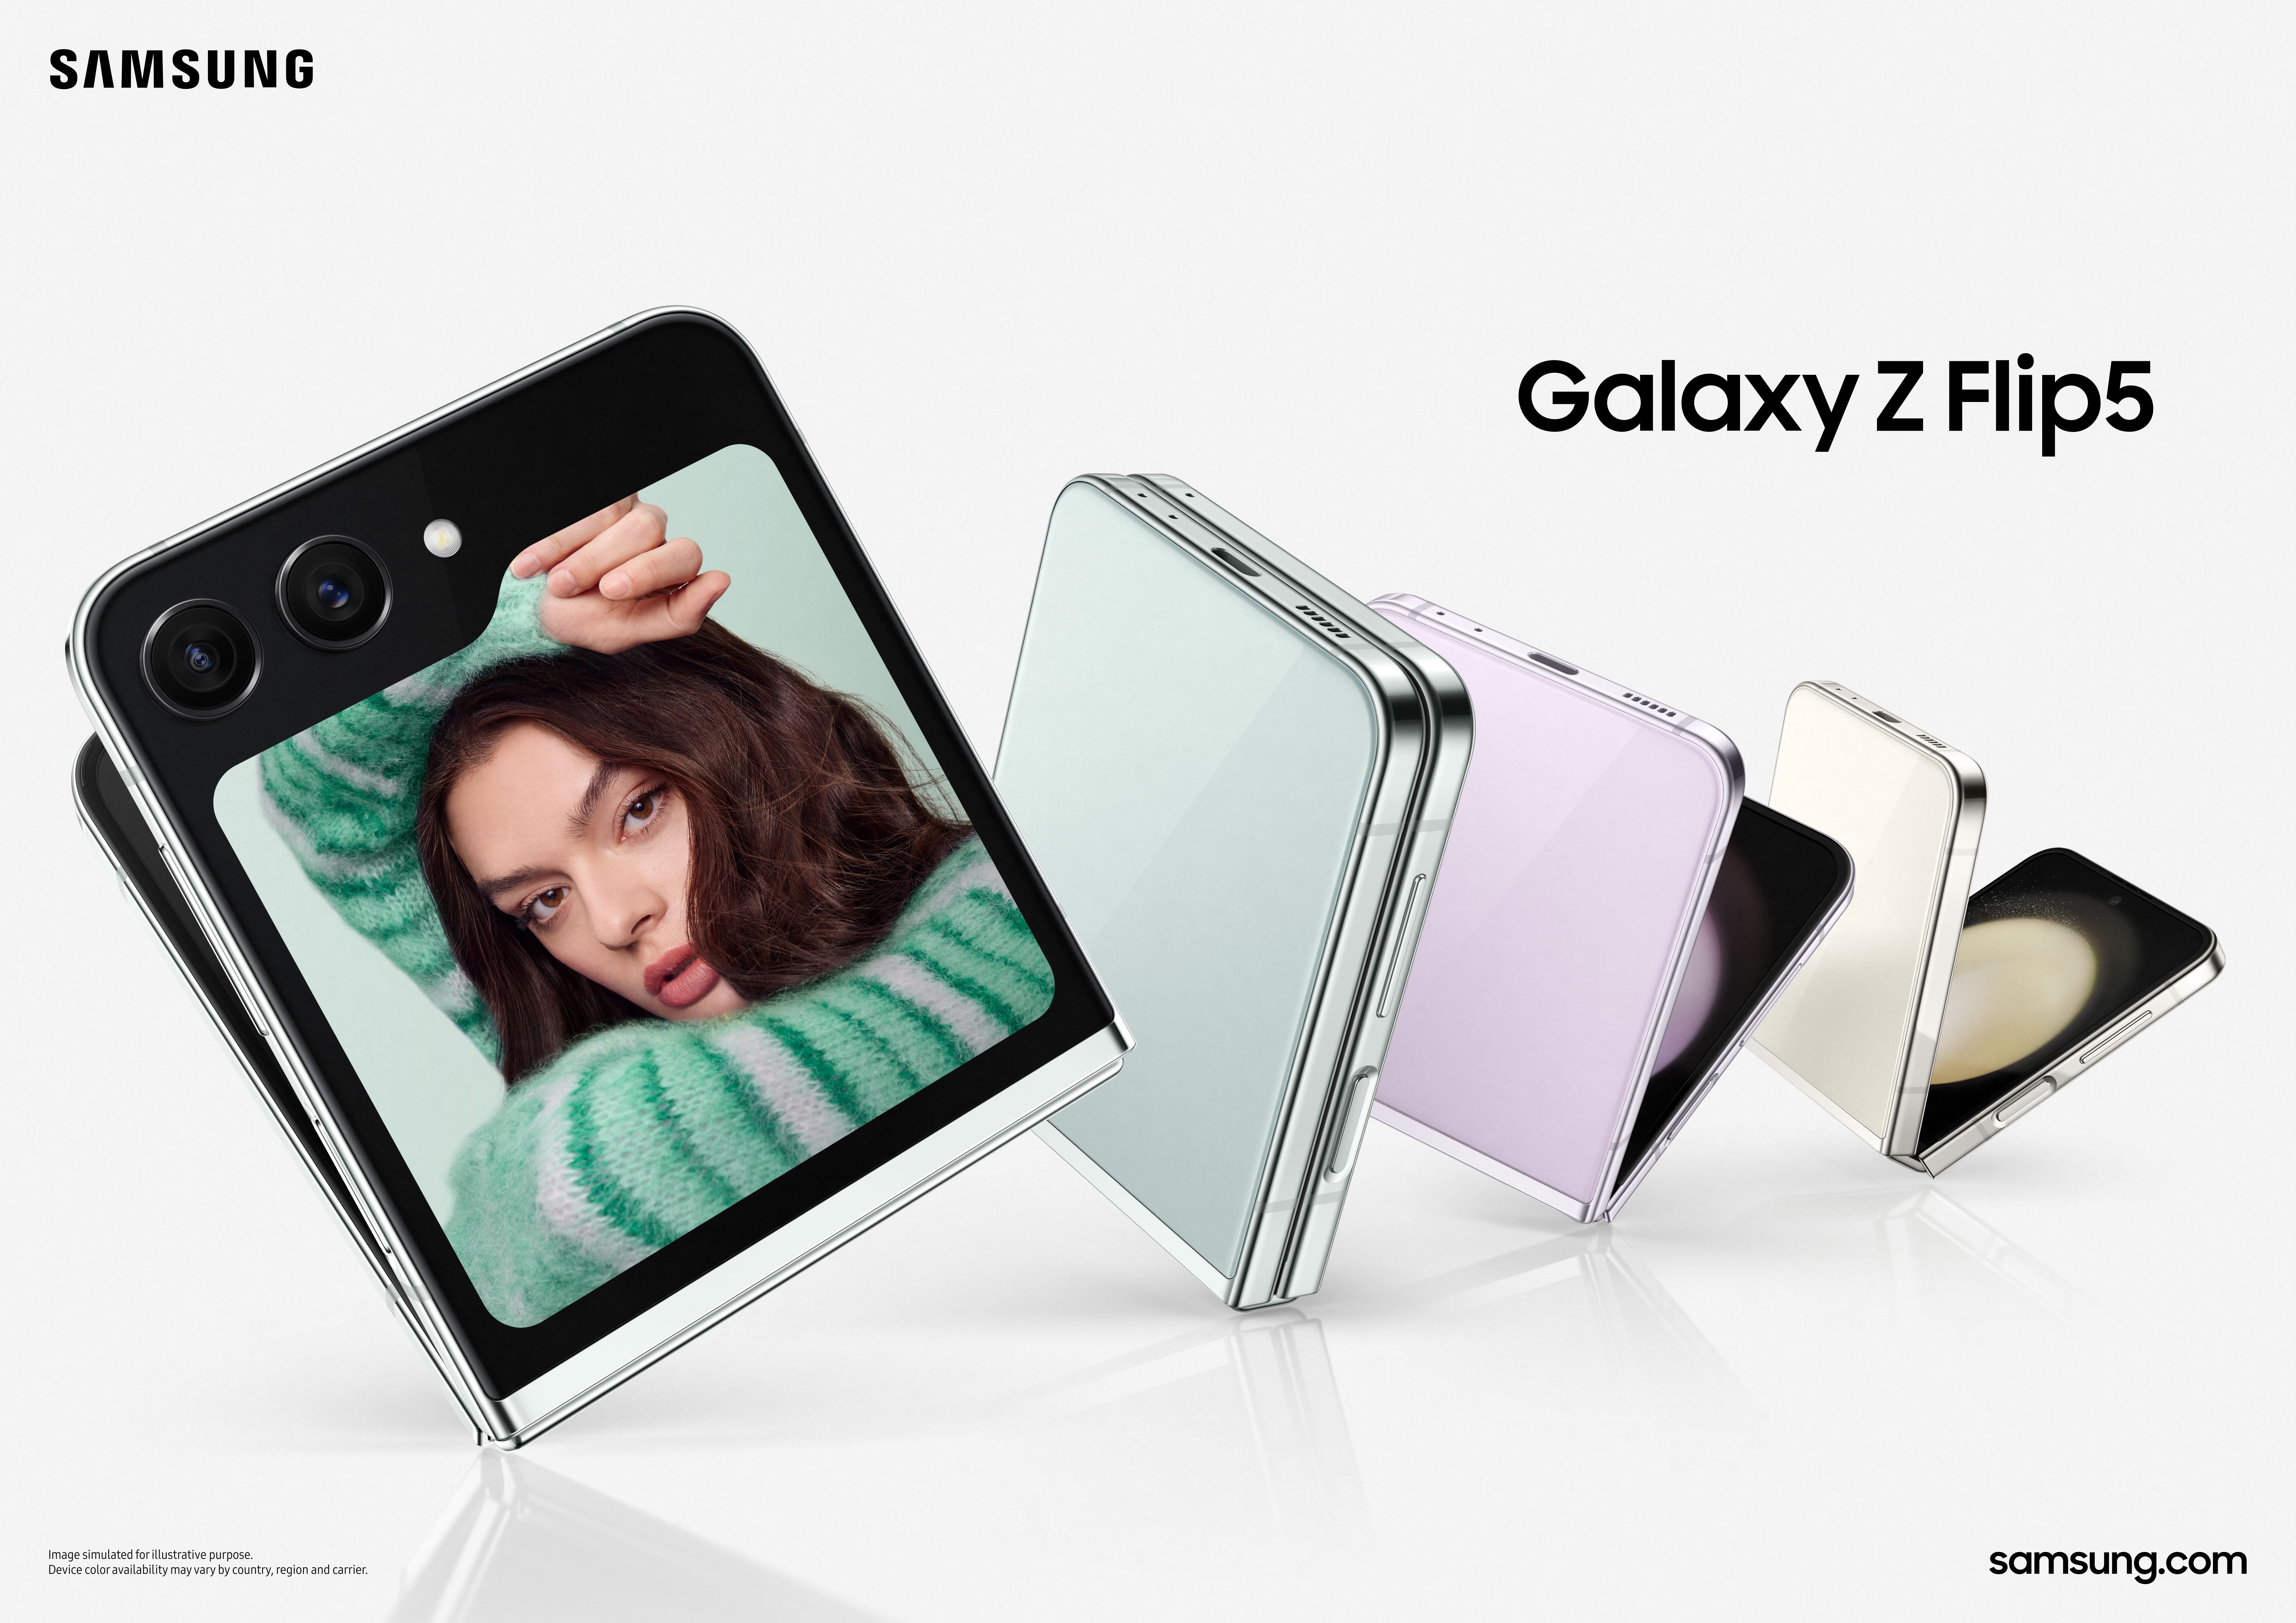 Nouveau Samsung Galaxy Z Flip 5